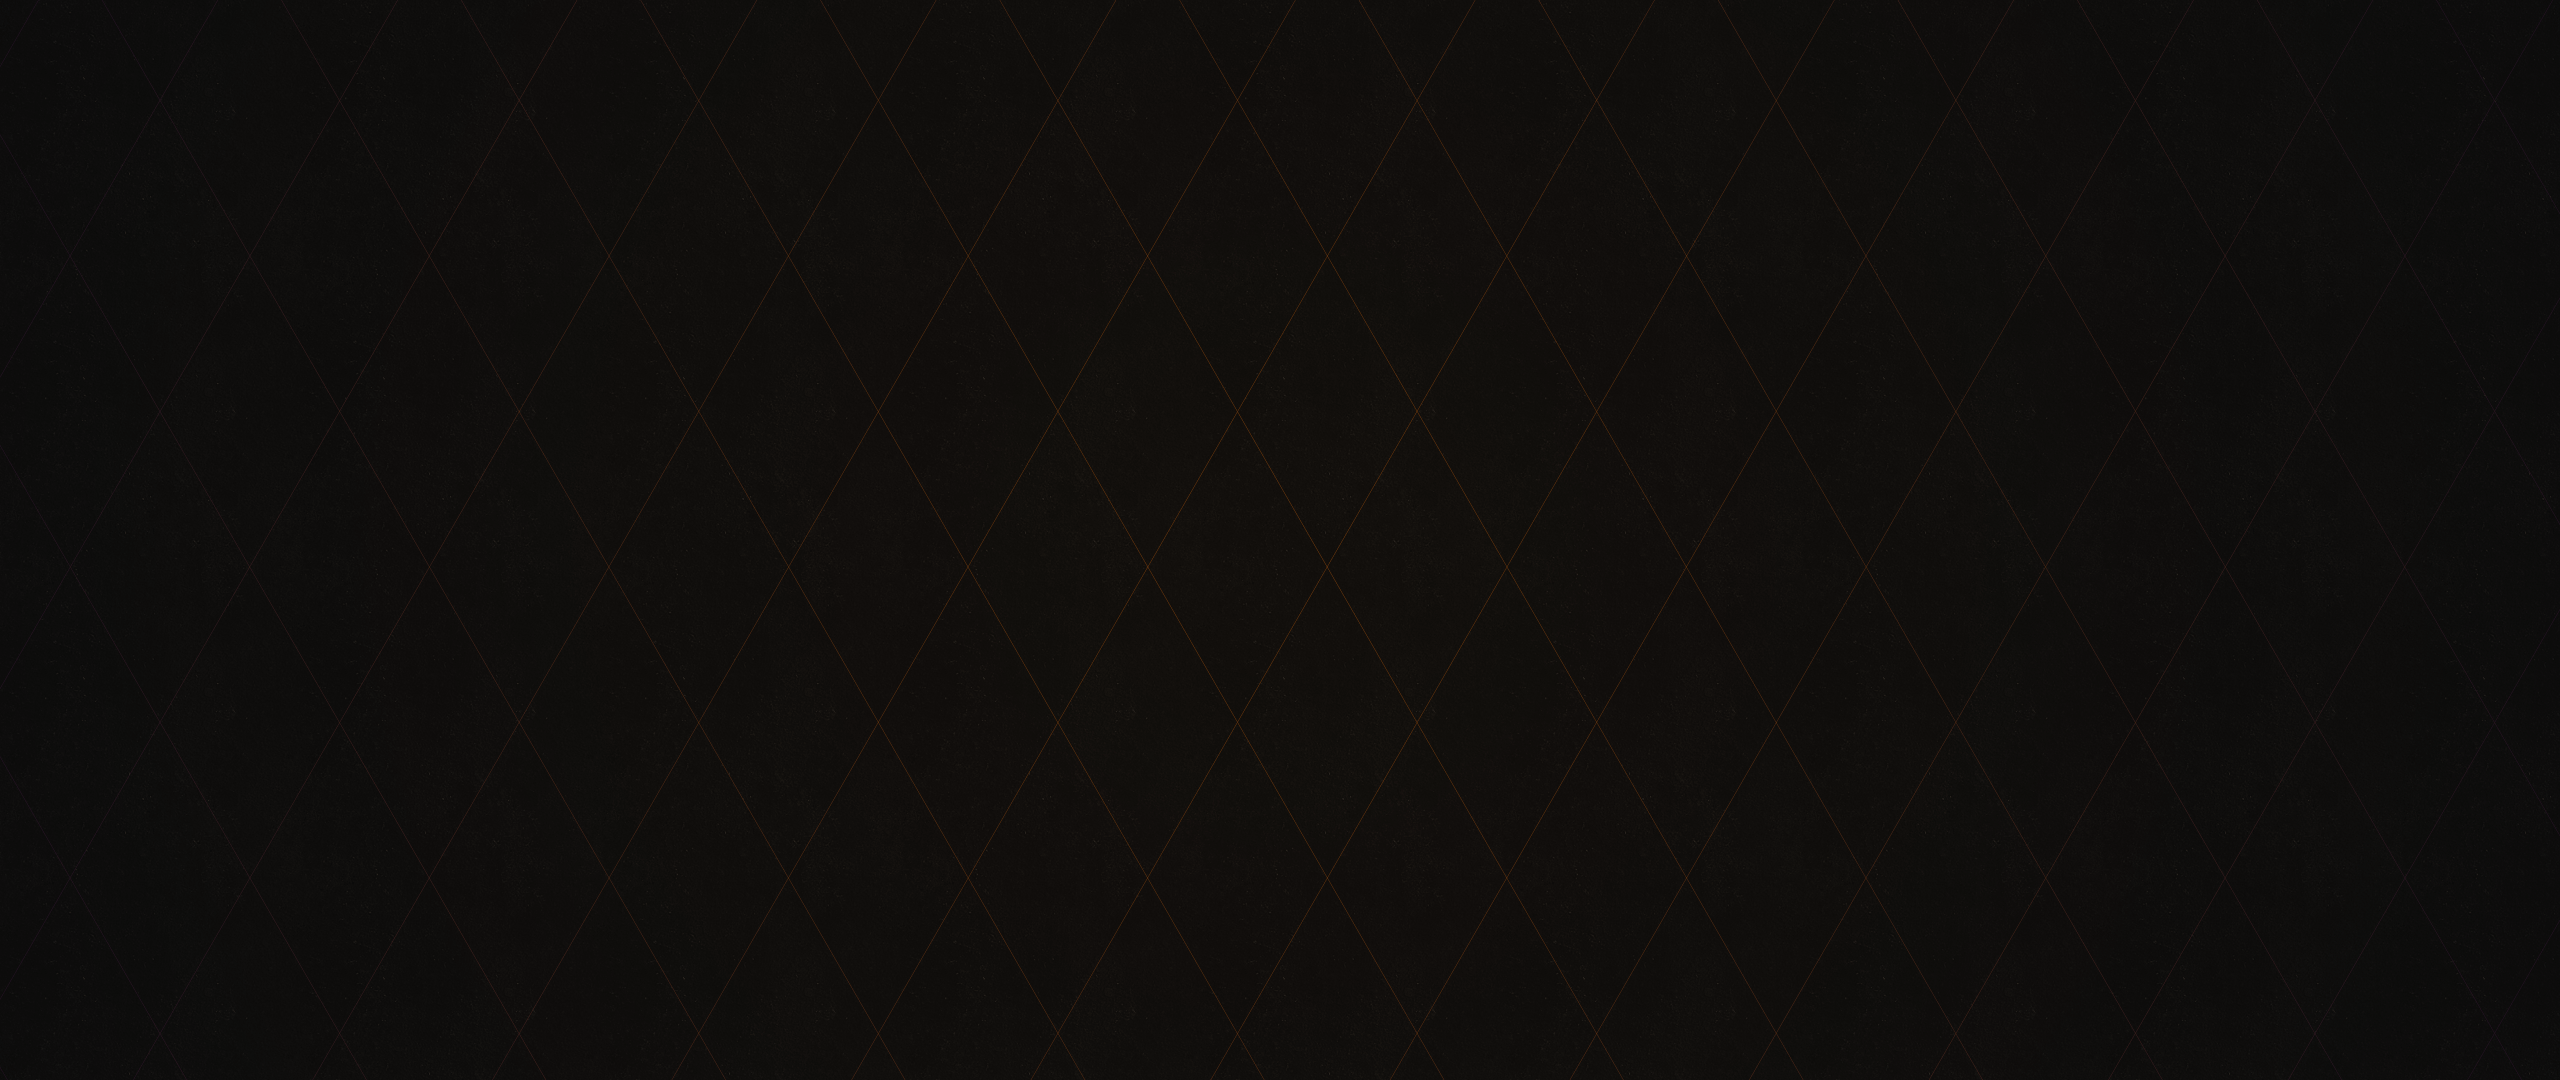 64k Ultra Hd Black Wallpapers Top Free 64k Ultra Hd Black Backgrounds